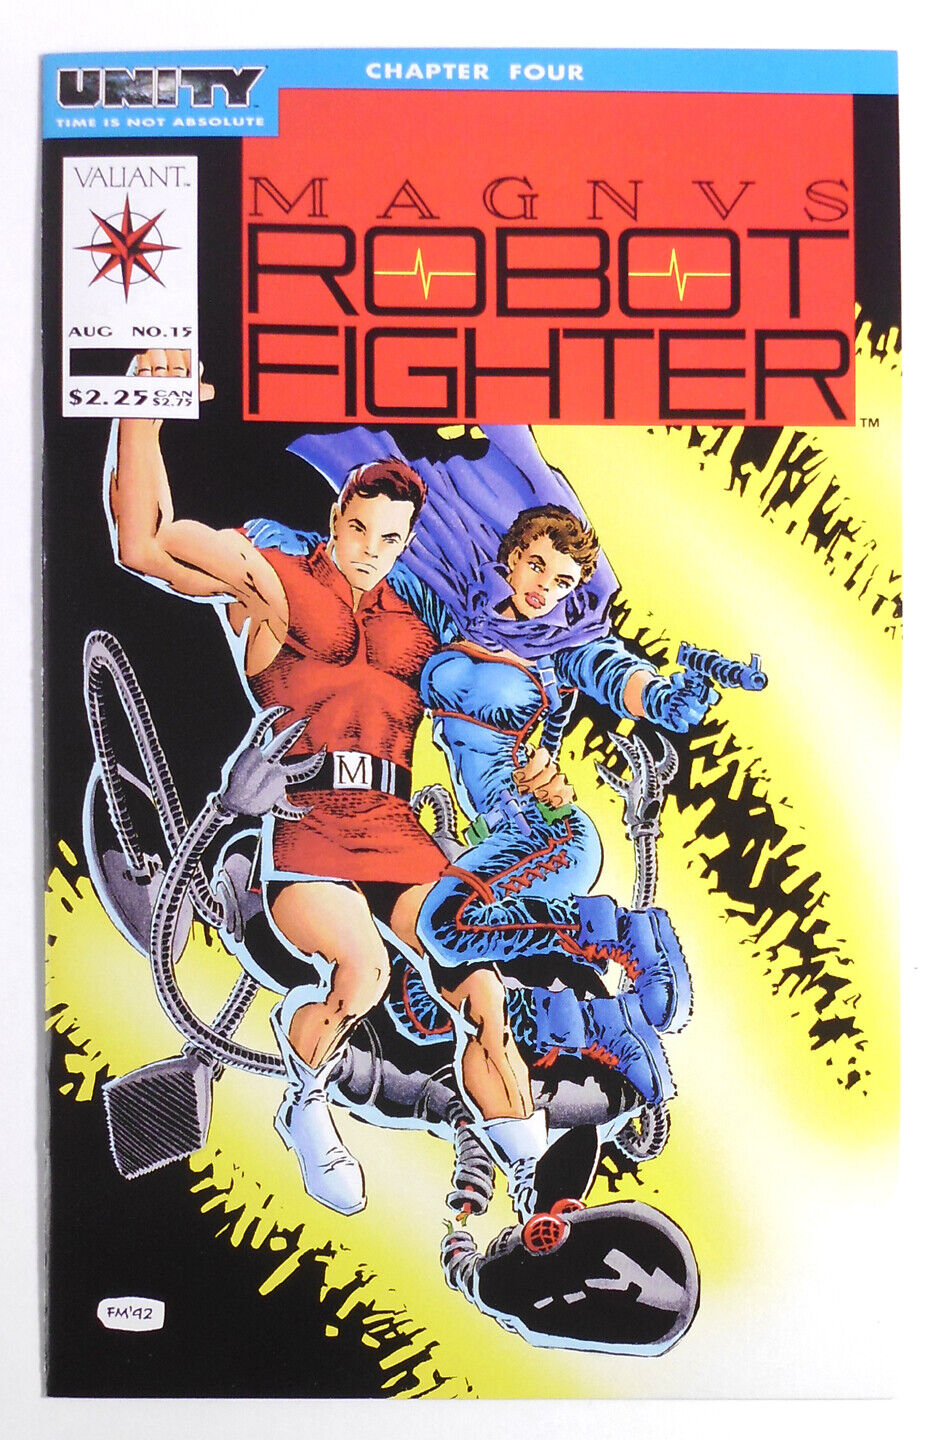 MAGNUS ROBOT FIGHTER #1 - #53 Main & Variants (1991-) Valiant Comics